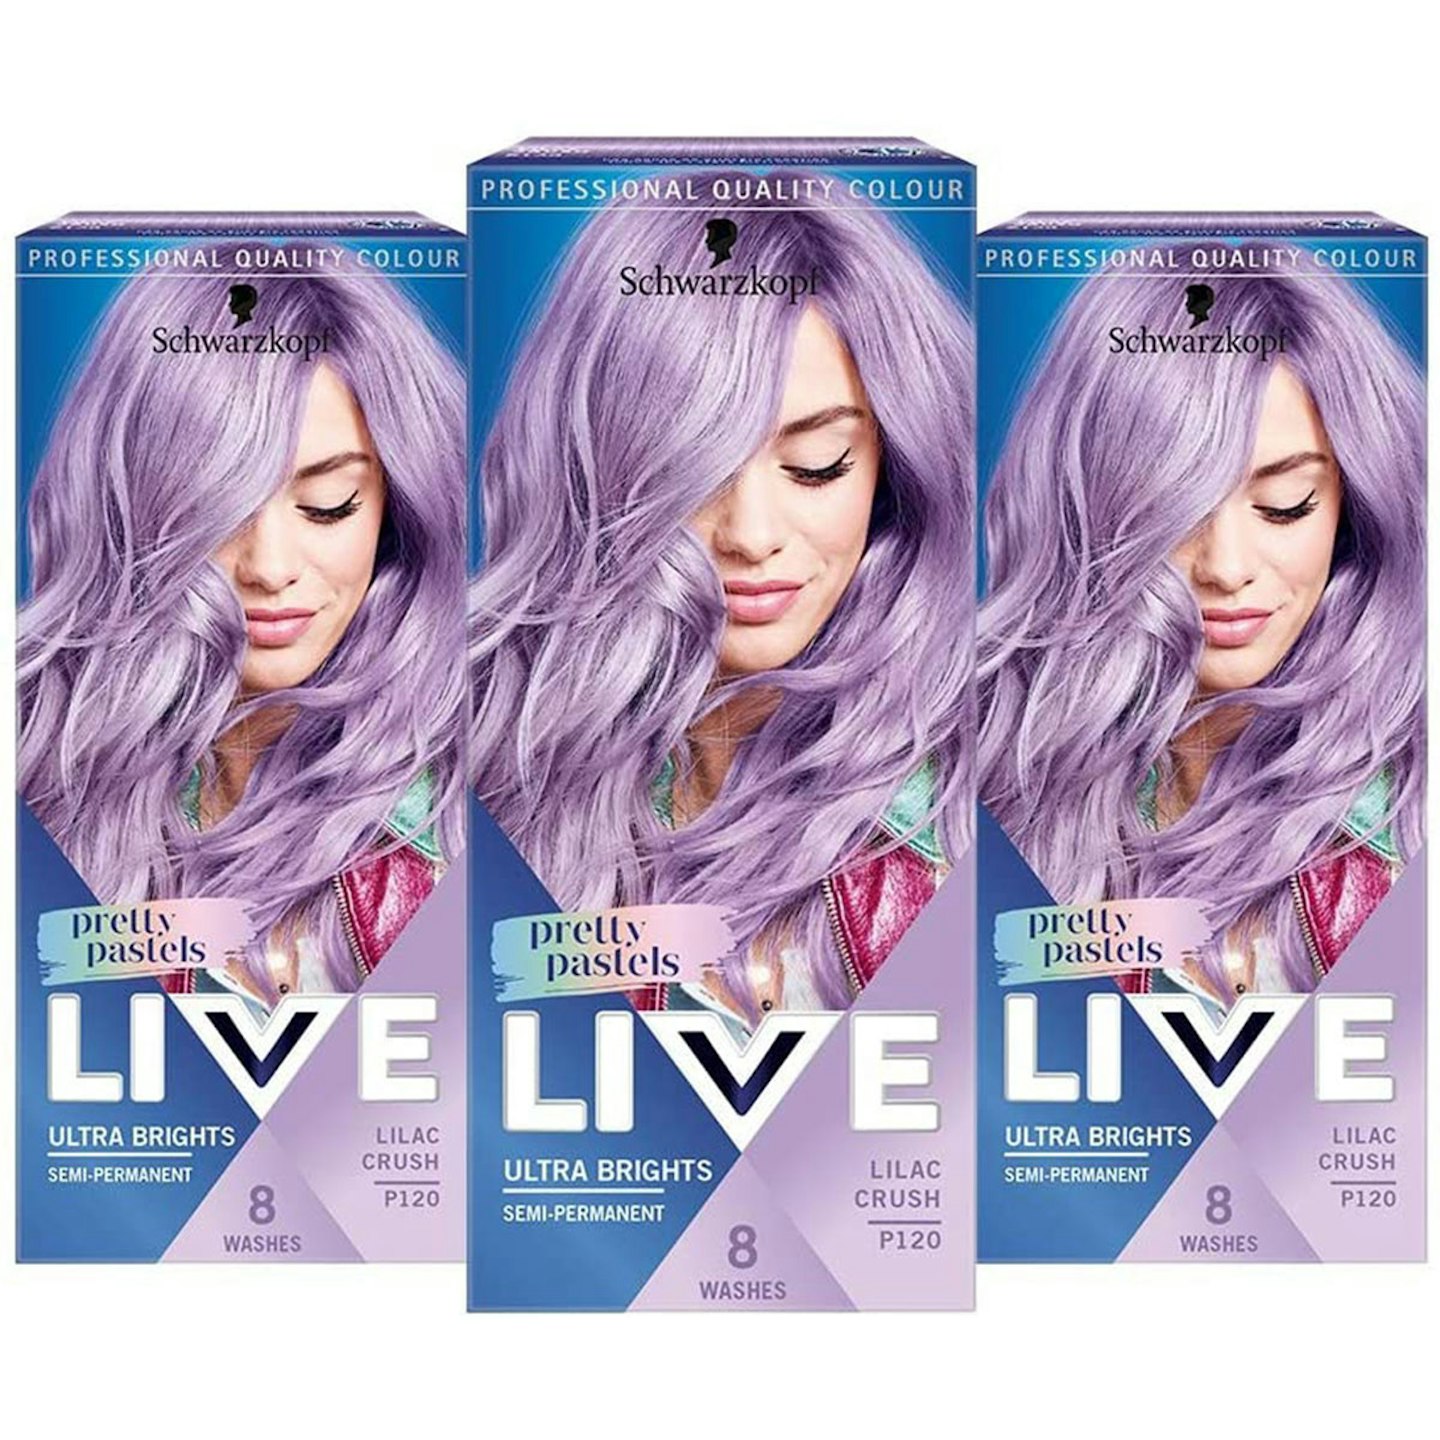 Schwarzkopf Live Ultra Brights Pretty Pastel Purple Hair Dye, 3-Pack Semi-Permanent 8 washes, P120 Lilac Crush